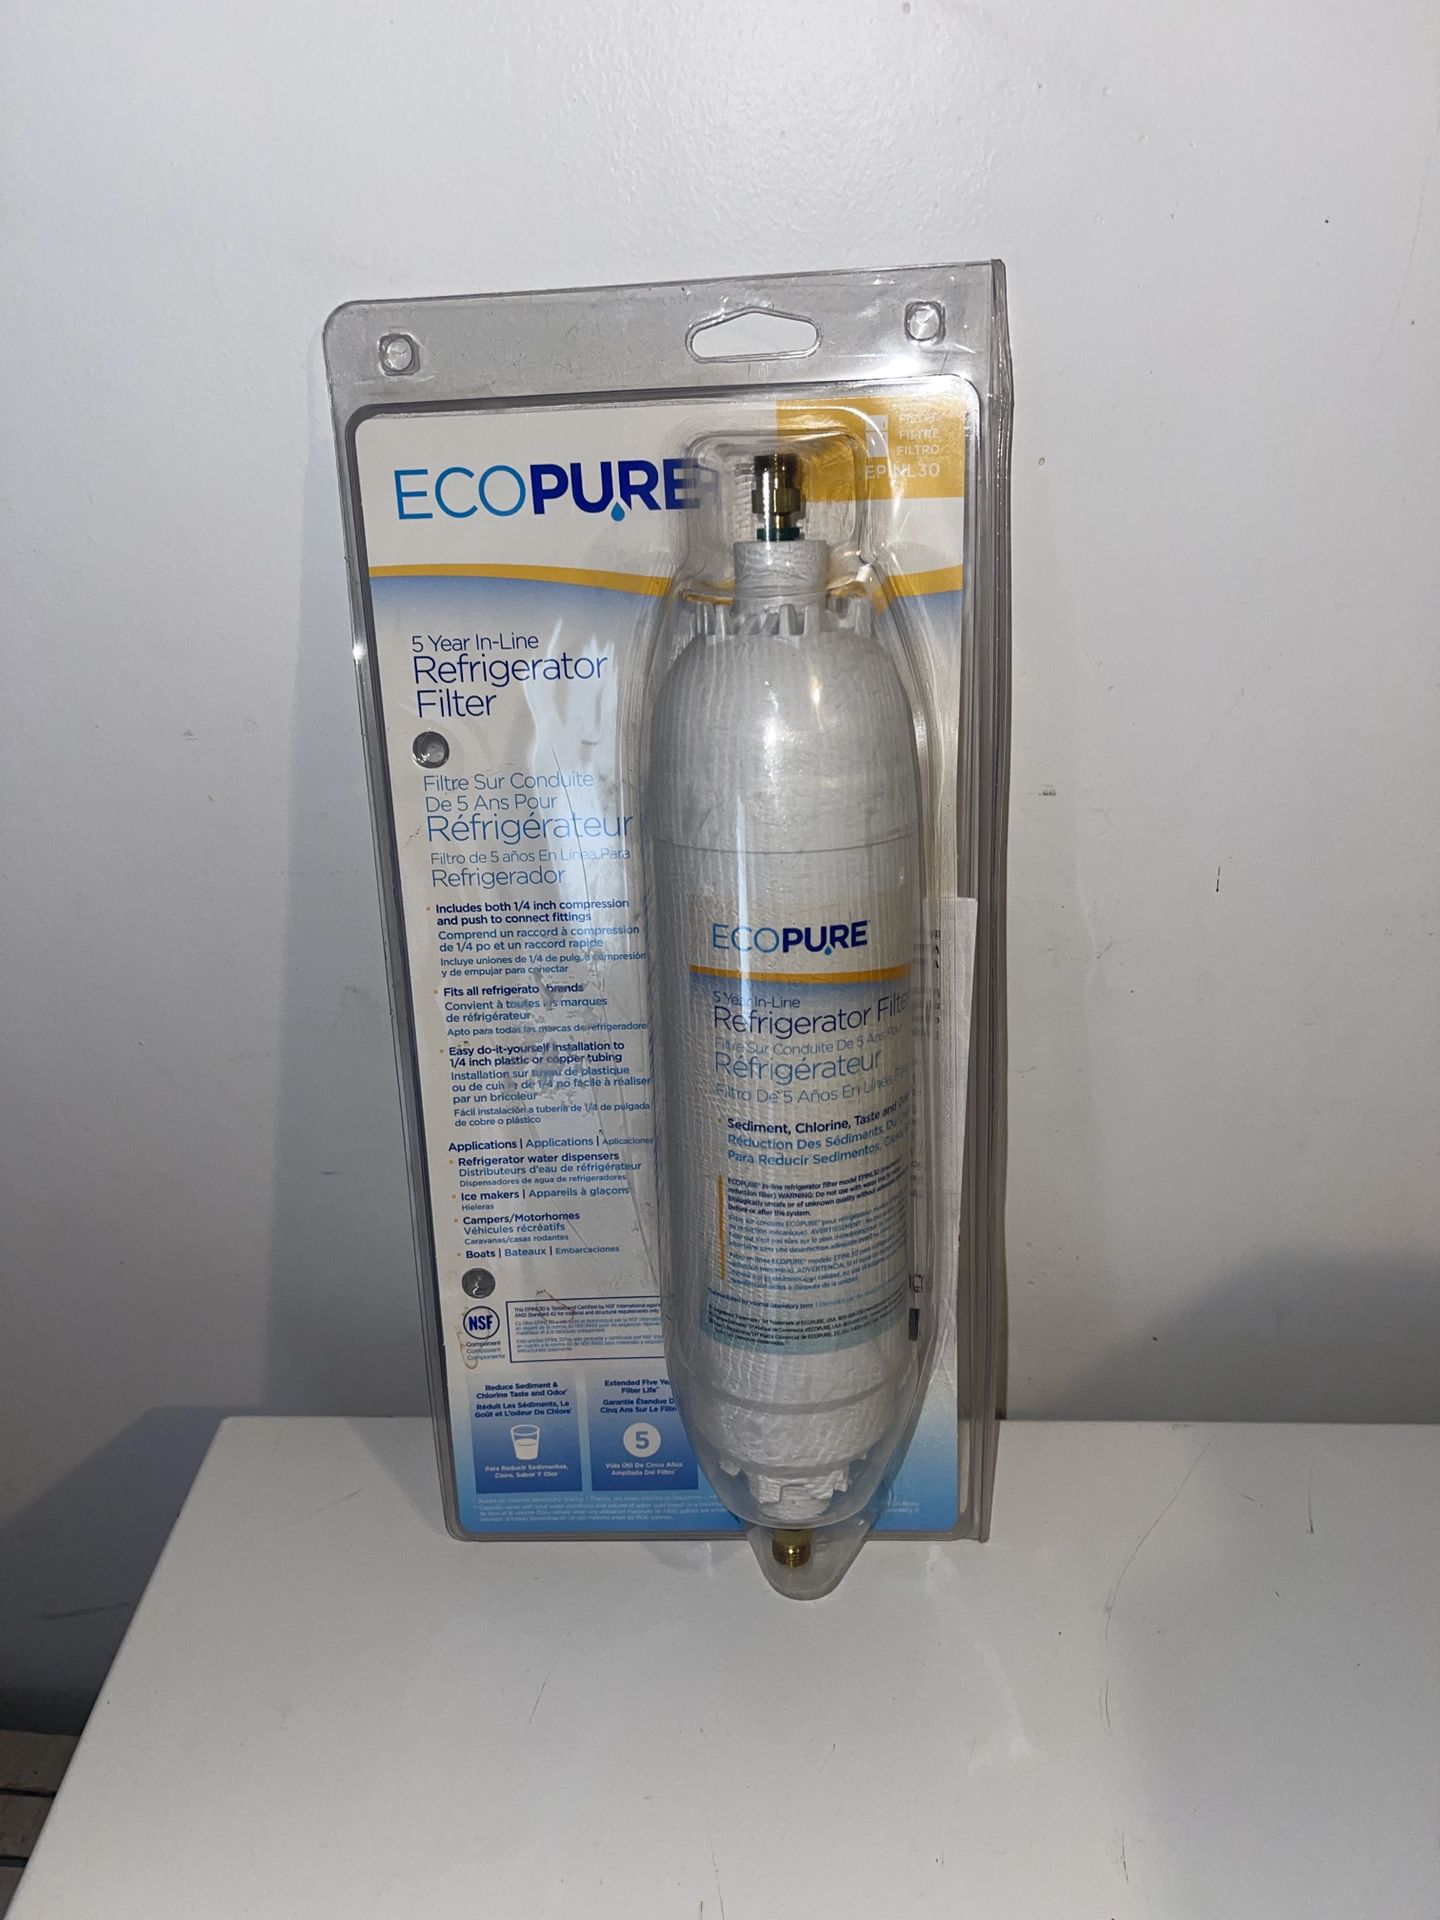 EcoPure EPINL30 5 Year in-Line Refrigerator Filter Brand New